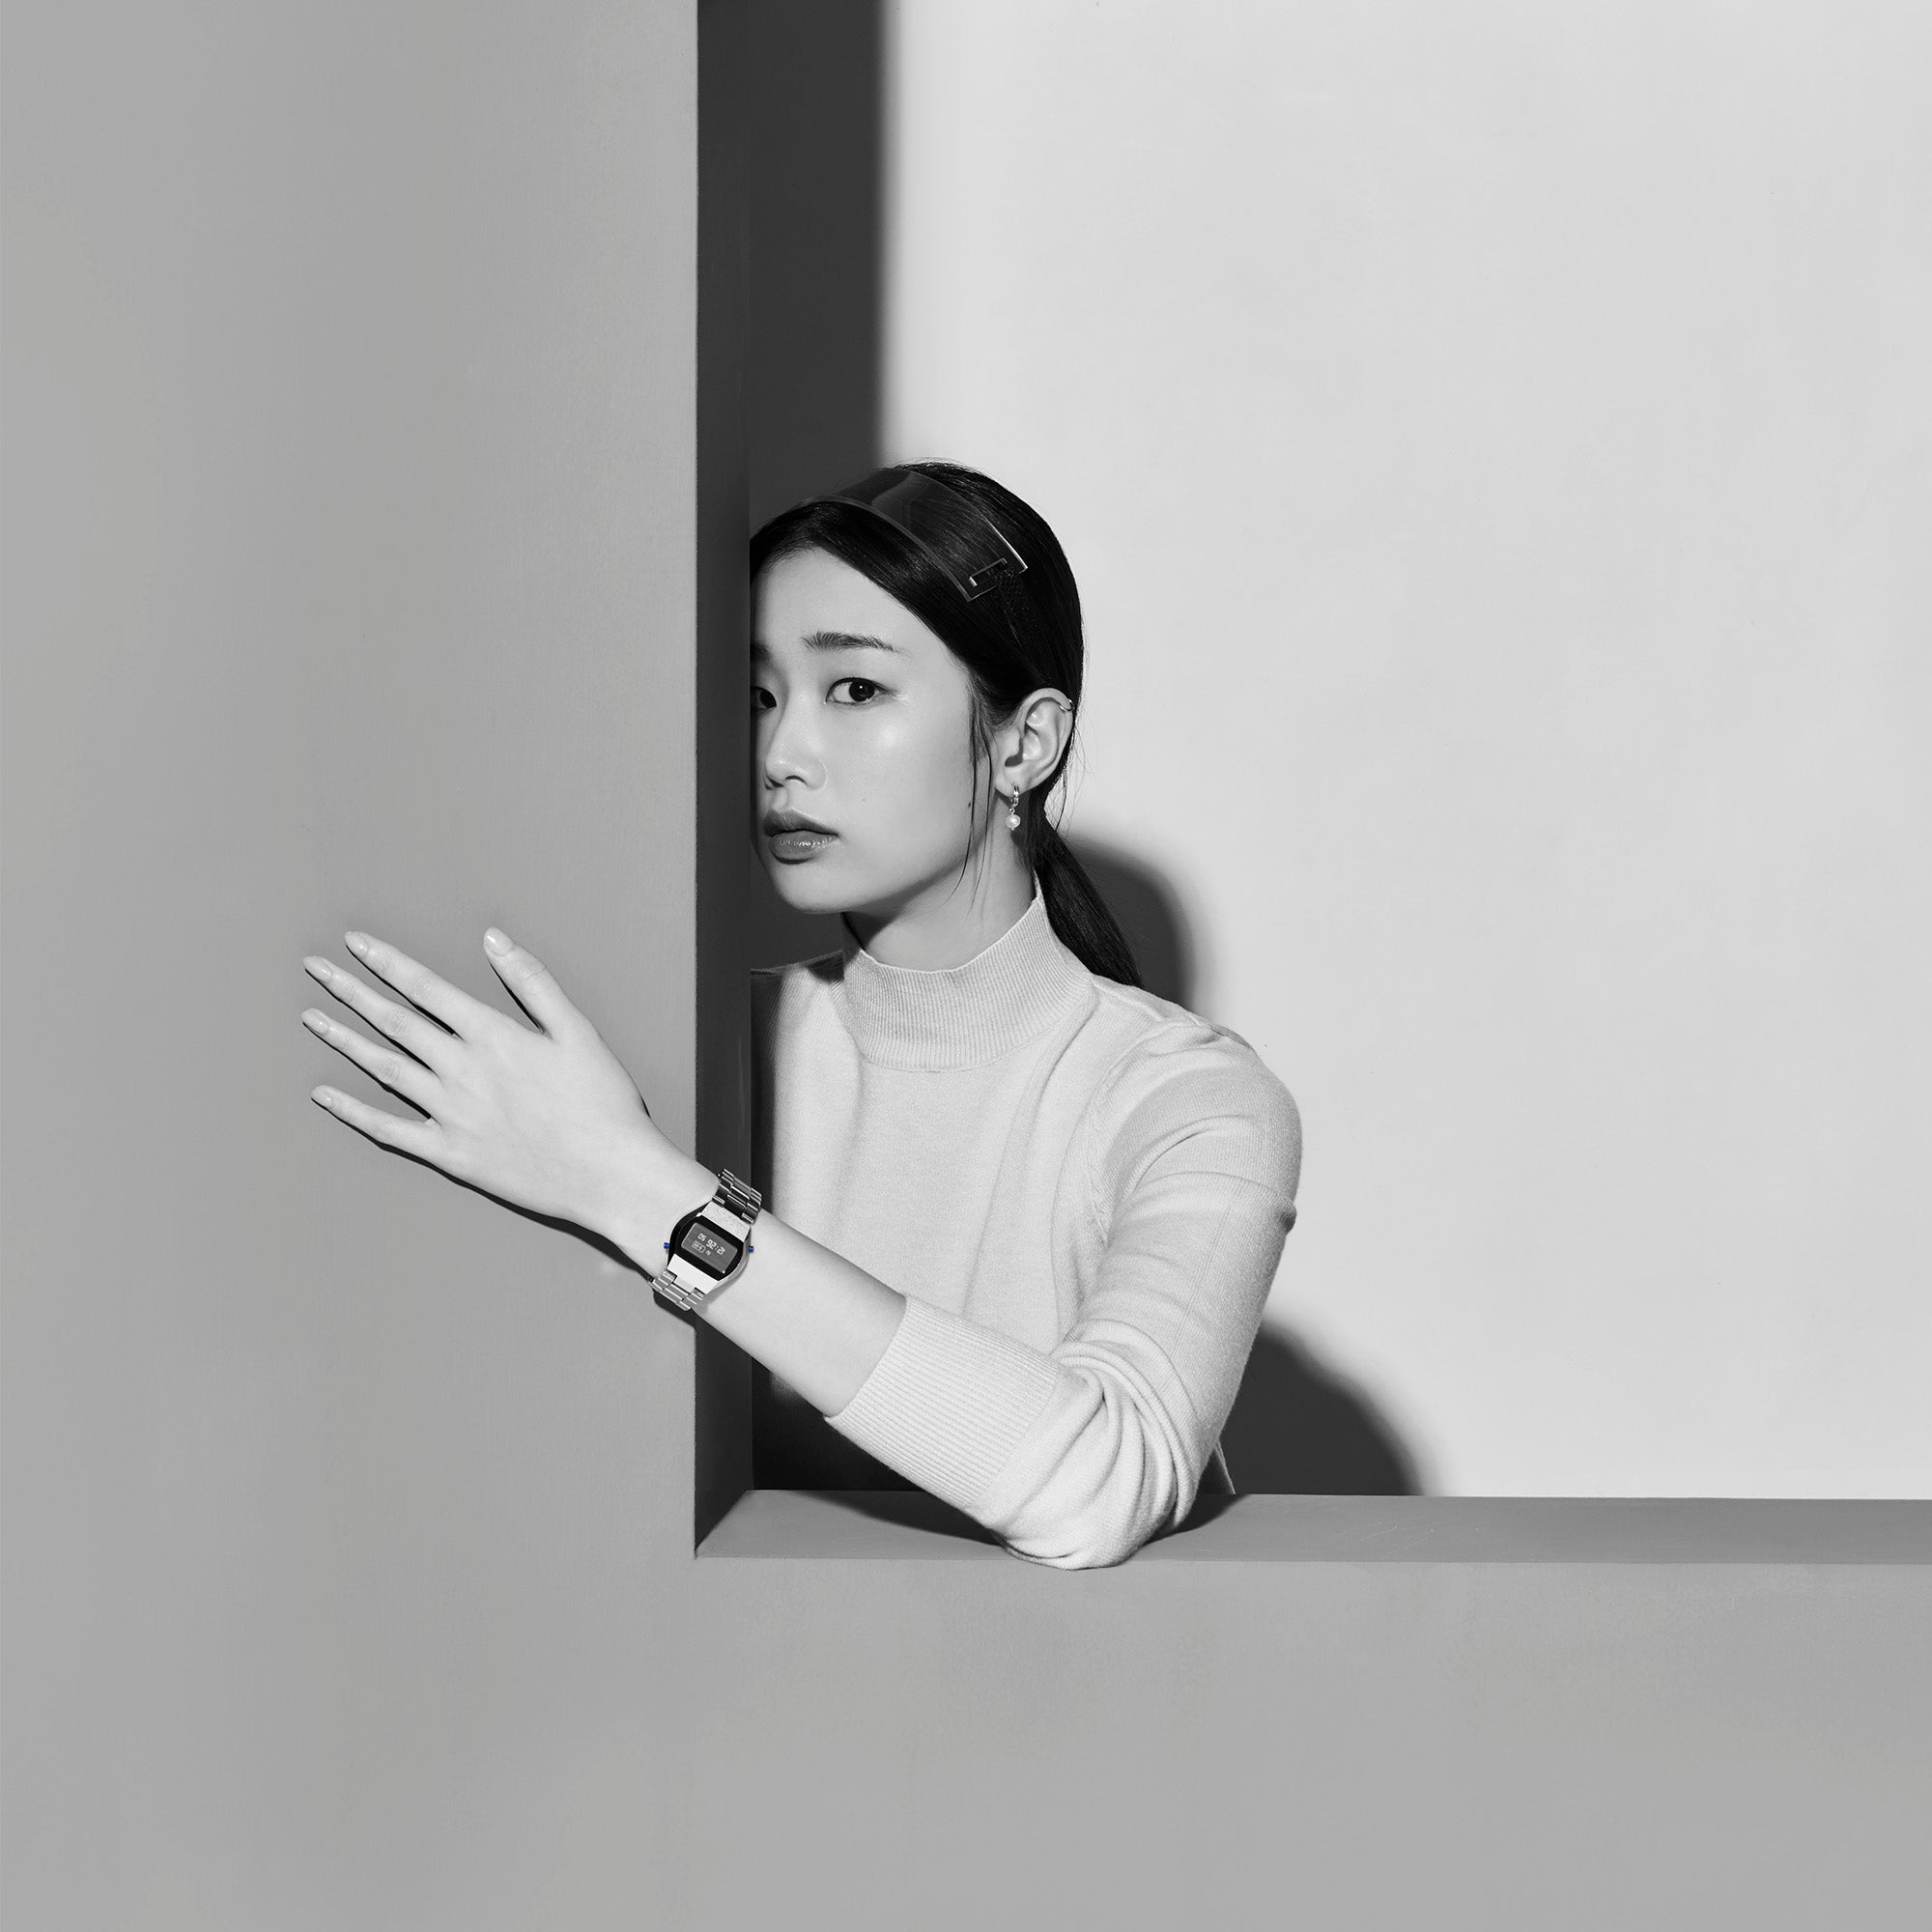 TIME:LESS:NESS - 1970 - The digital watch (Bracelet - Black)